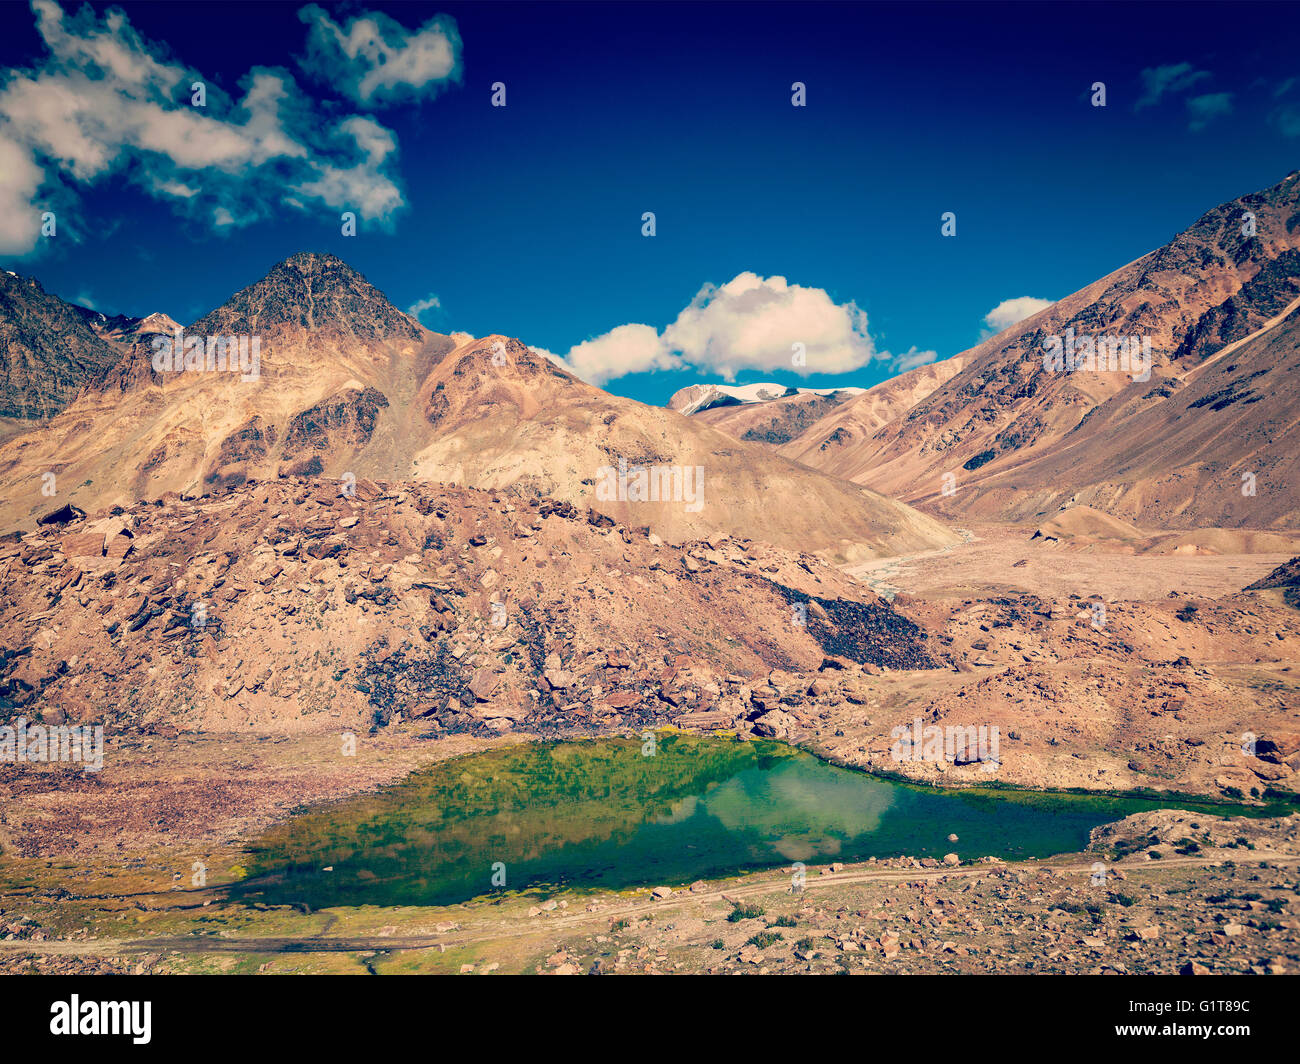 Himalayan landscape with small lake Stock Photo